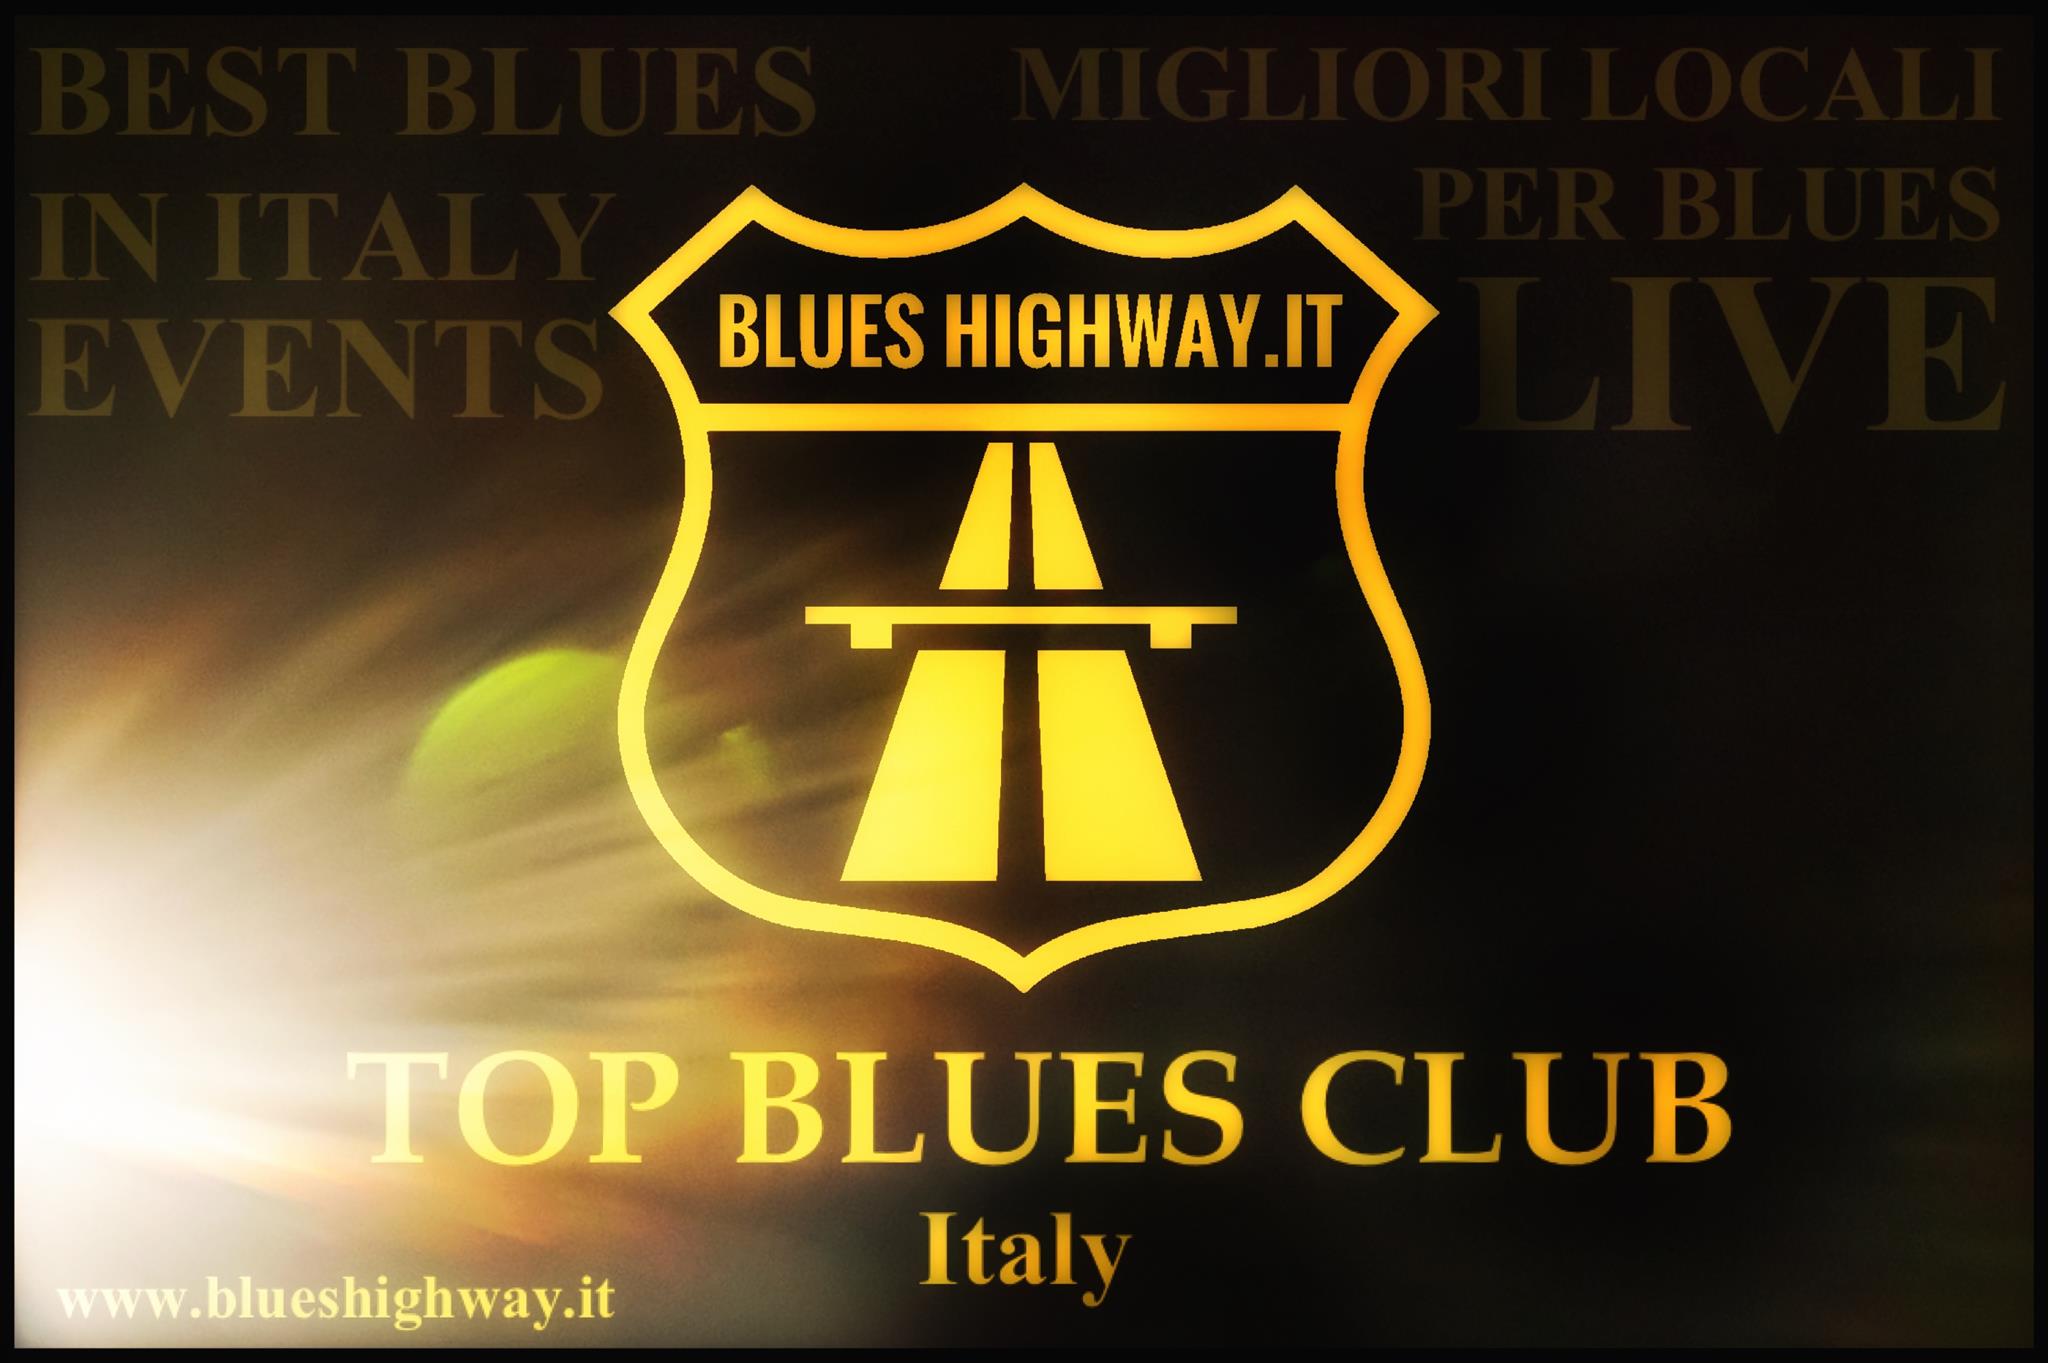 THIS WEEK - TOP BLUES CLUB - ITALY